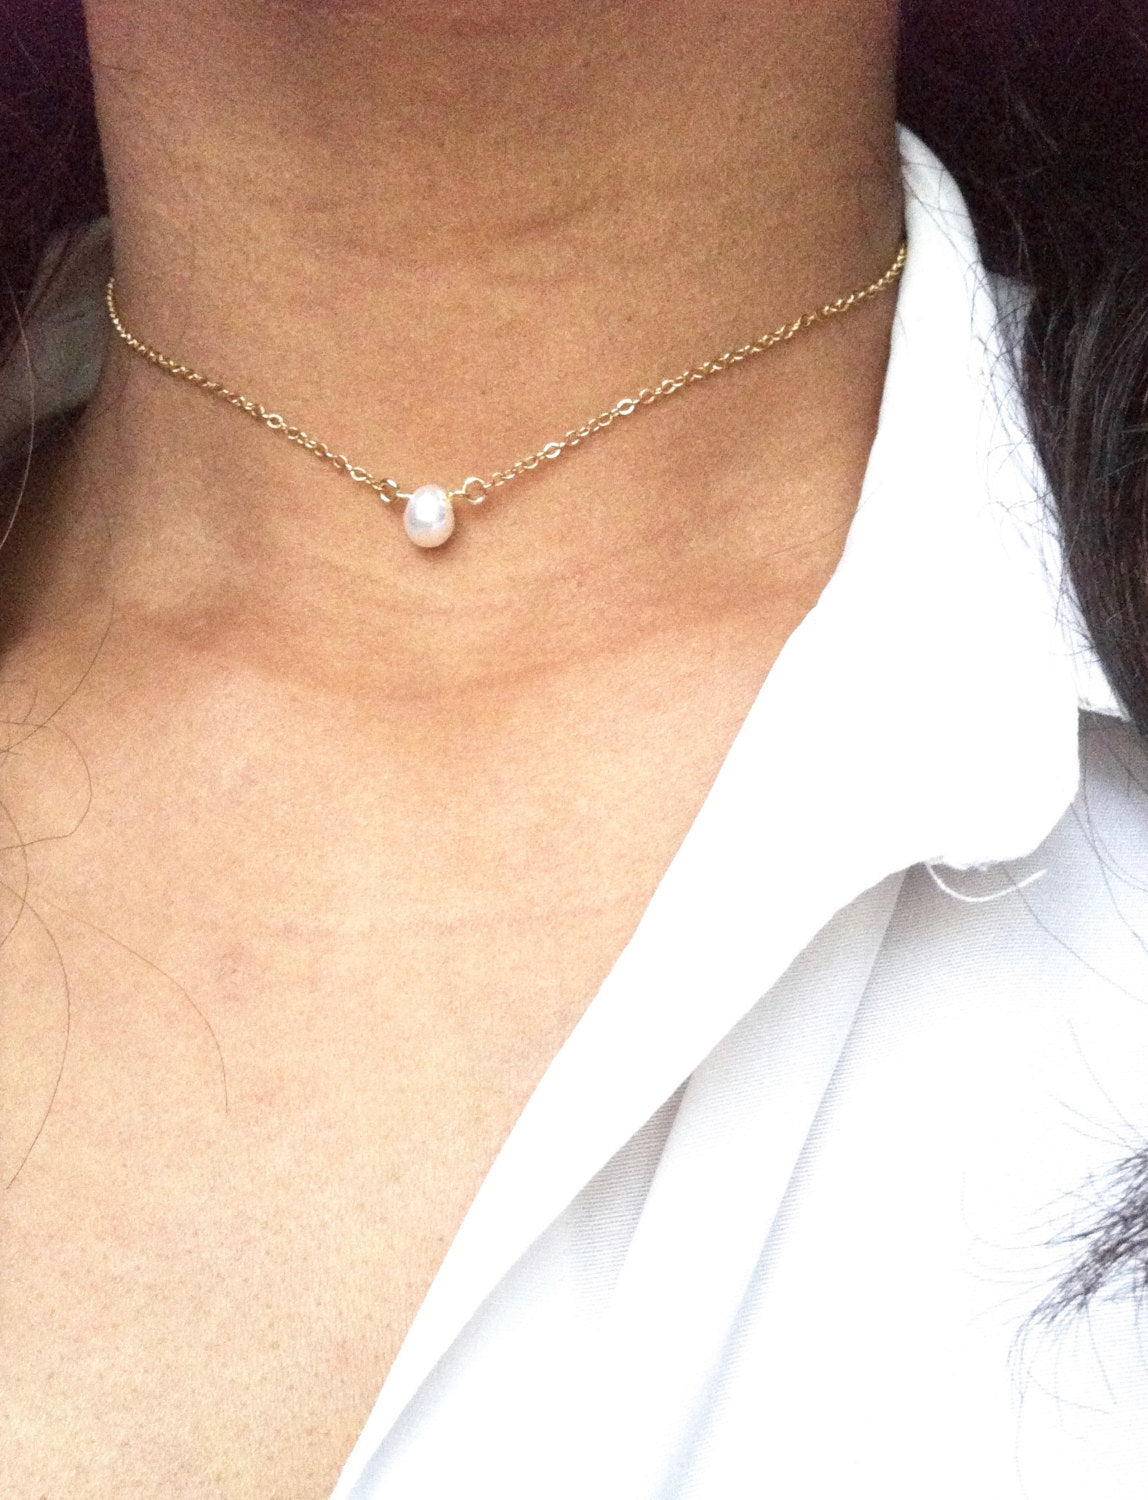 Small Delicate Single Pearl Choker Necklace | Dainty Pearl Choker Necklace | Simple Everyday Choker | IB Jewelry